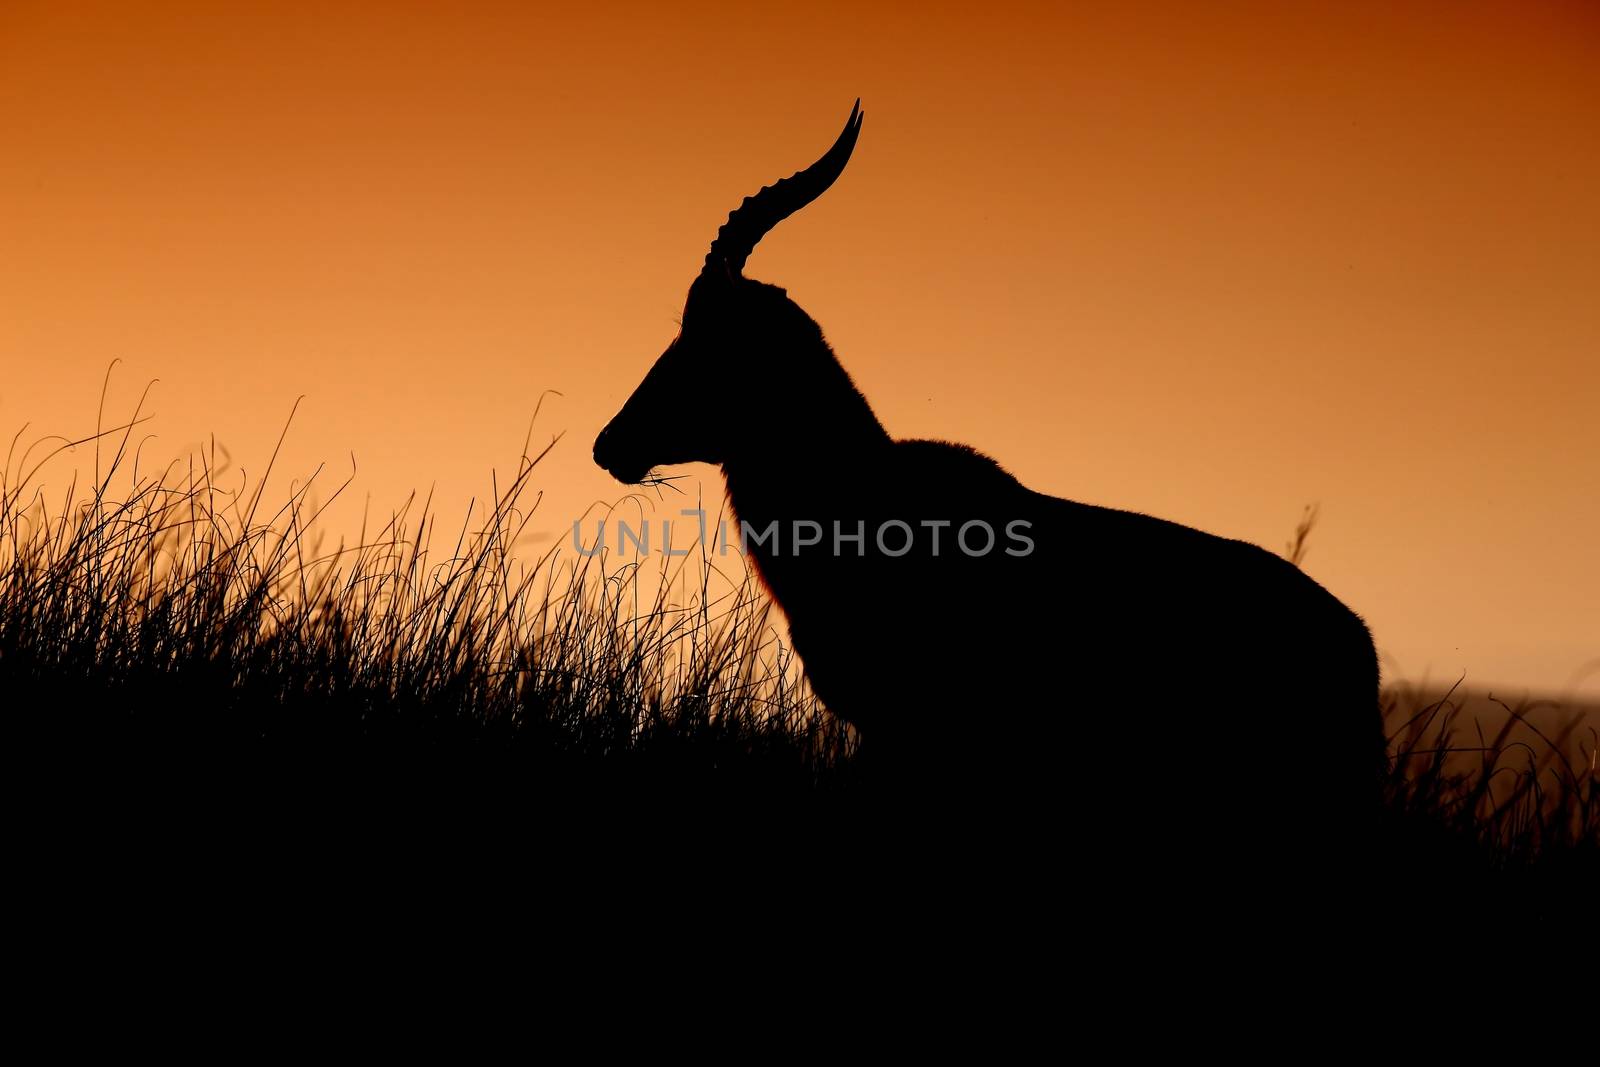 Antelope Silhouette by fouroaks